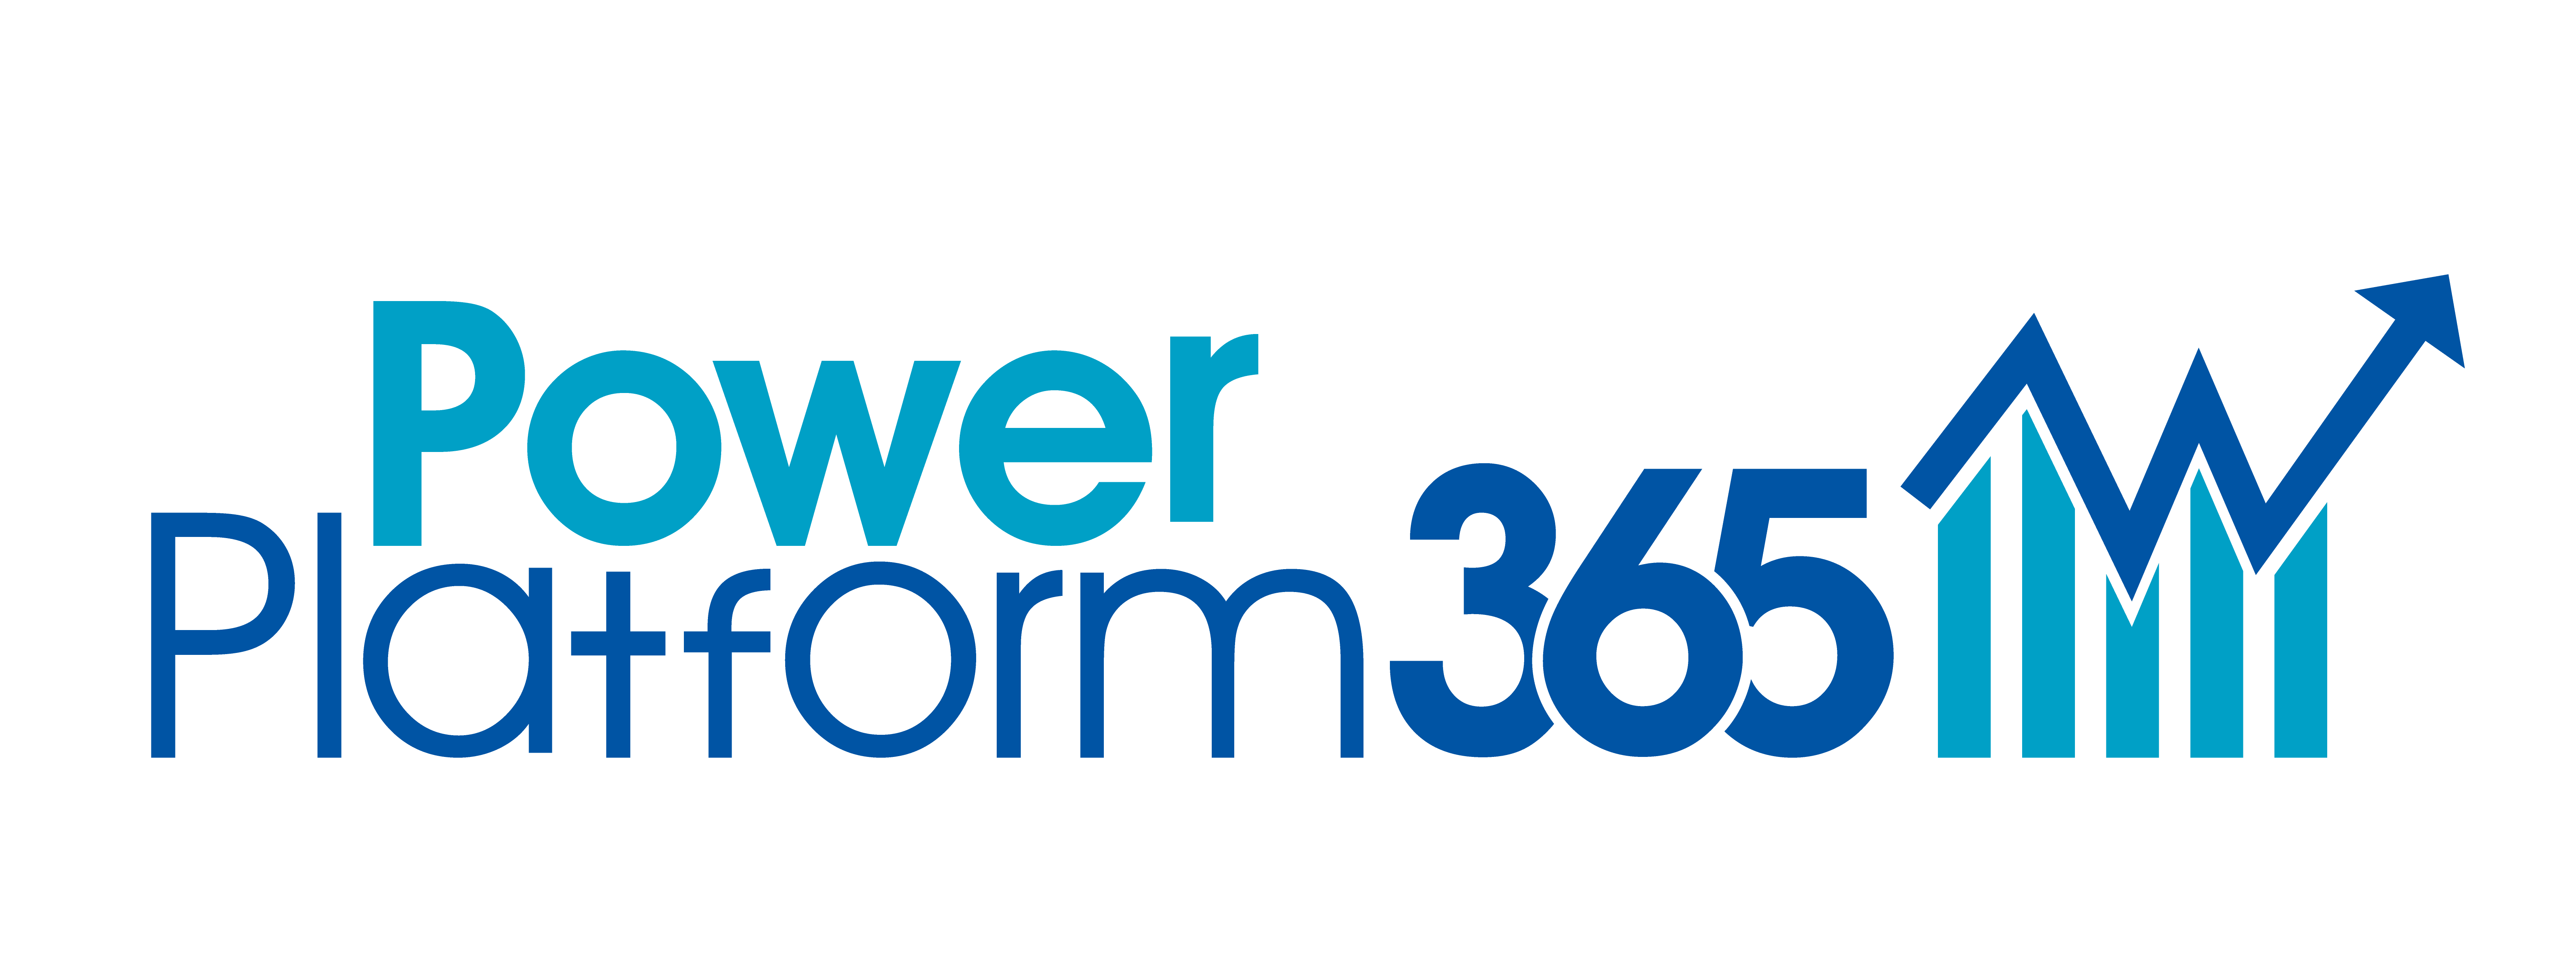 Why Microsoft Power Platform is so popular? Power Platform 365